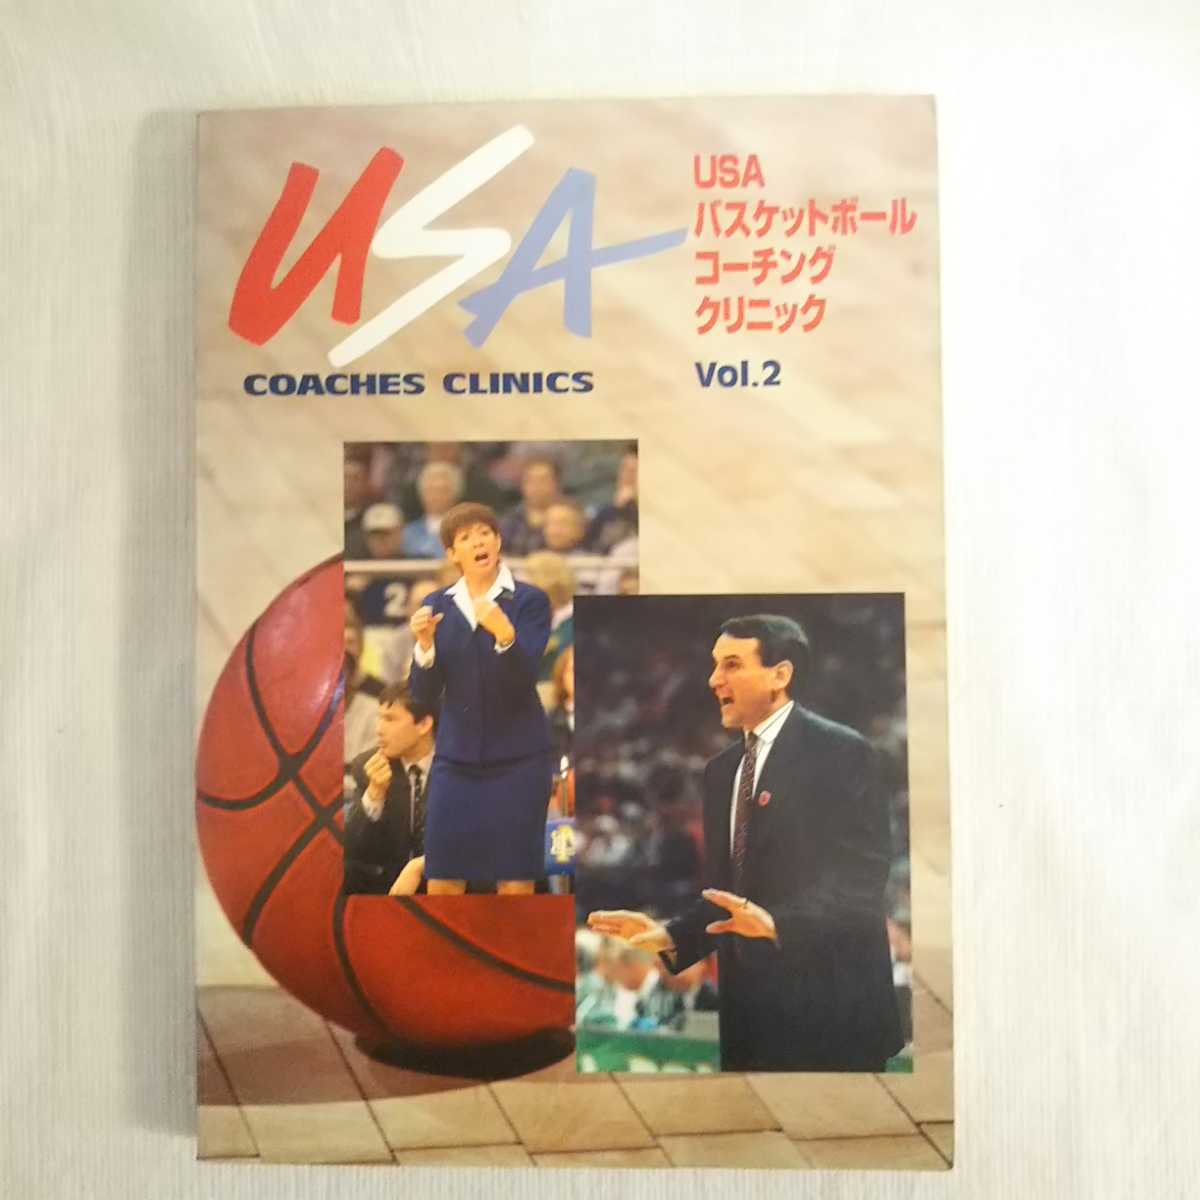 USA баскетбол Coach ngklinikVol.2